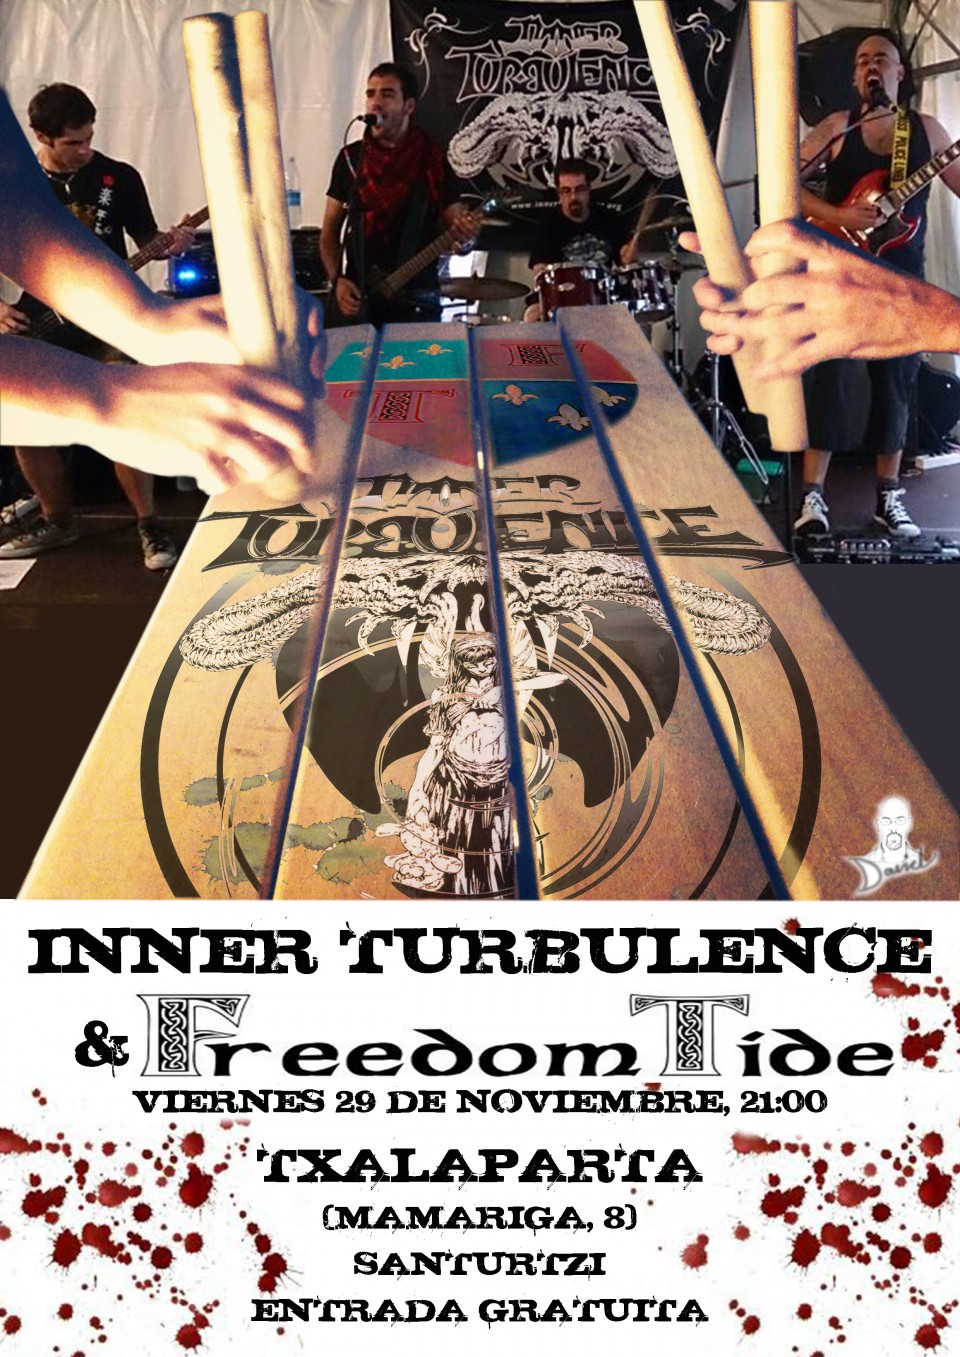 INNER TURBULENCE + FREEDOM TIDE @ Txalaparta (Santurtzi) Viernes 29 Noviembre 2013